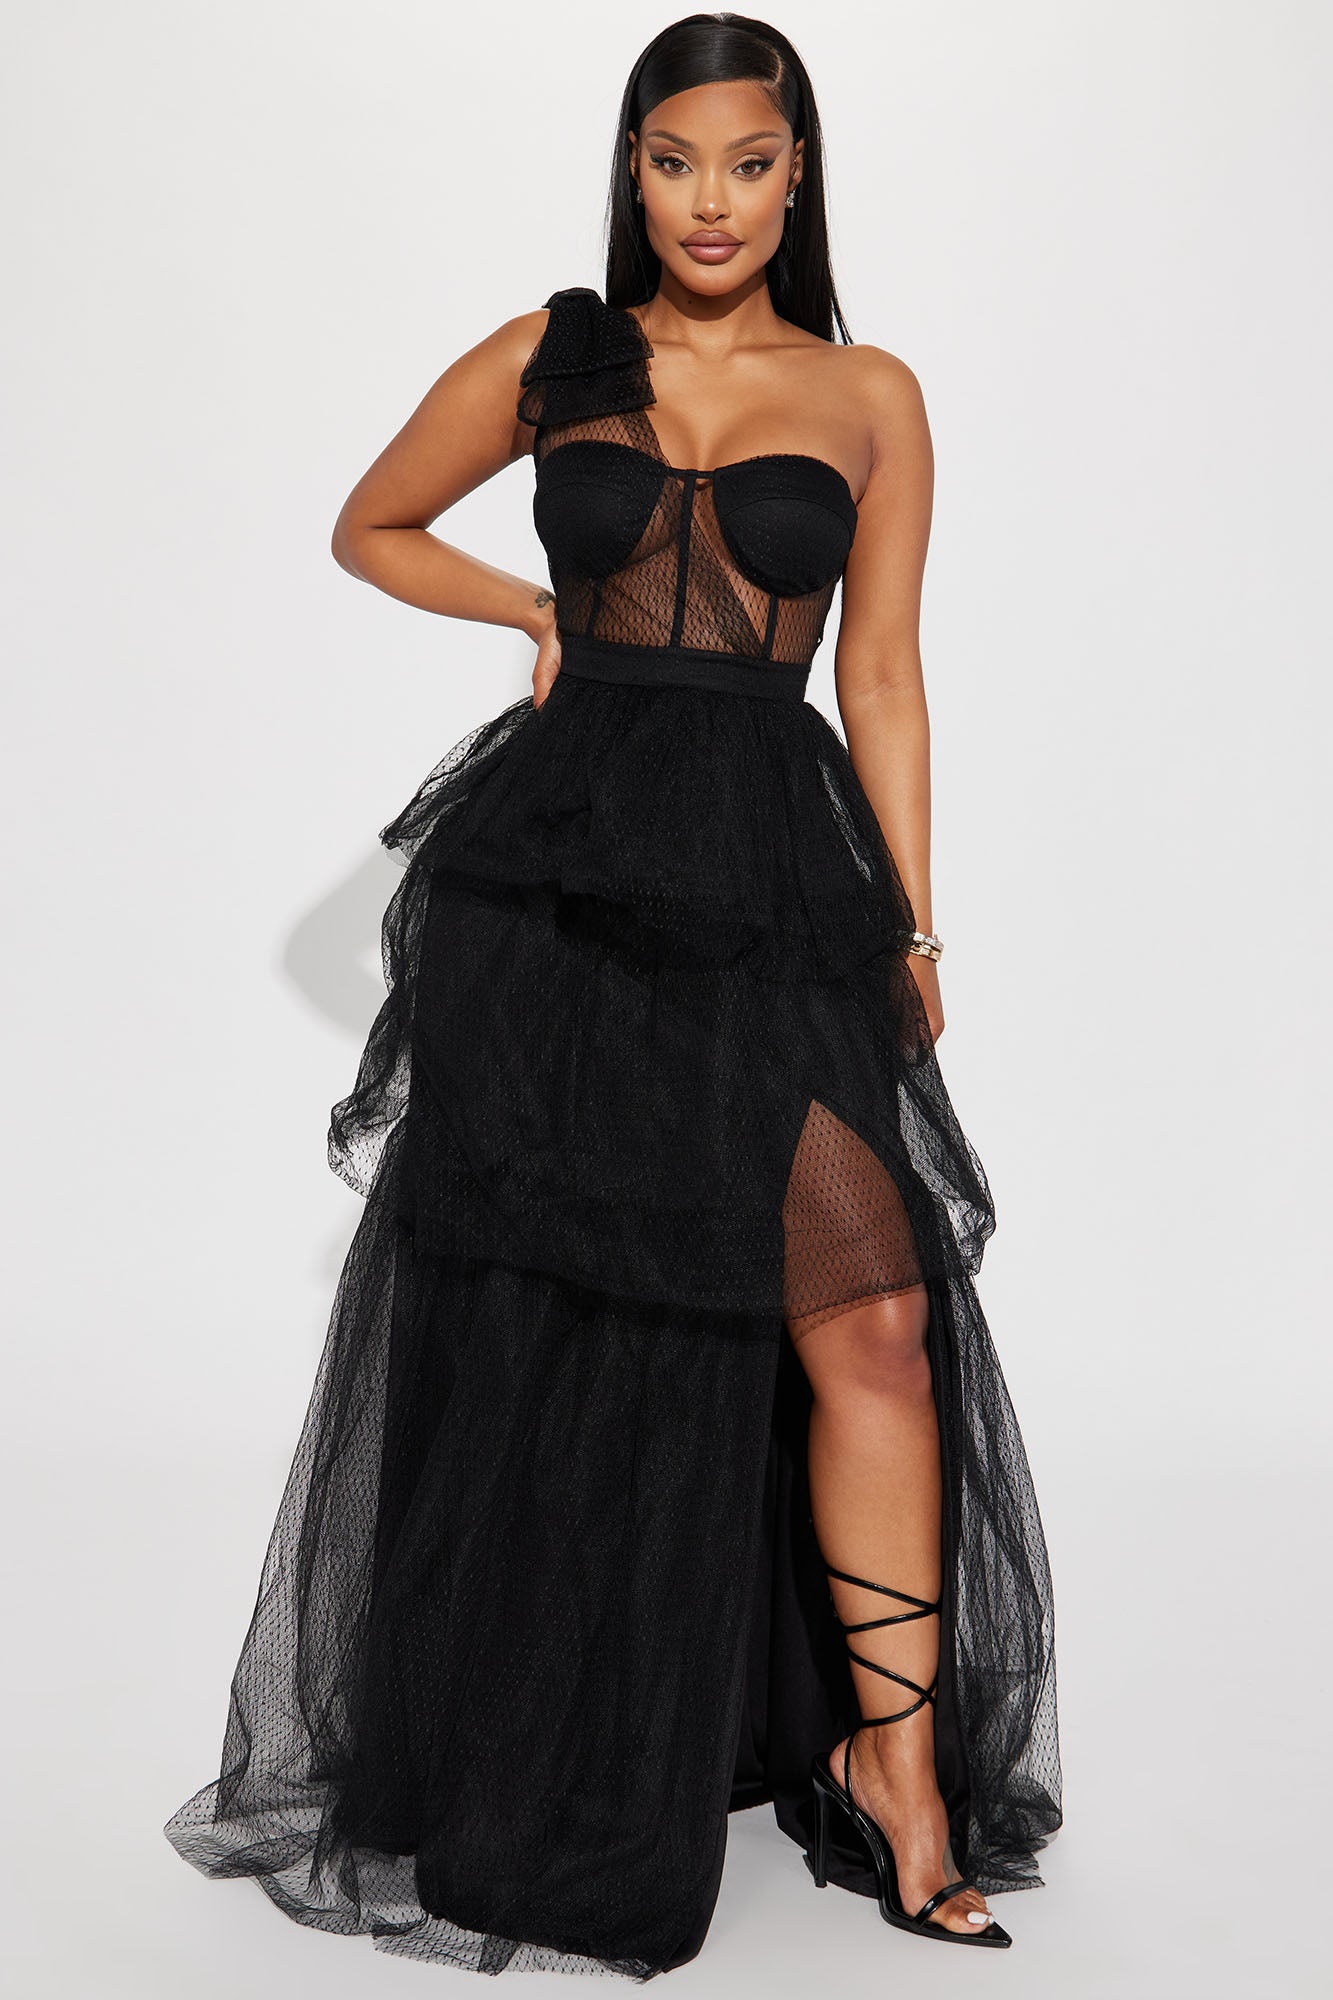 Flirty Affair Tulle Gown - Black, Fashion Nova, Dresses